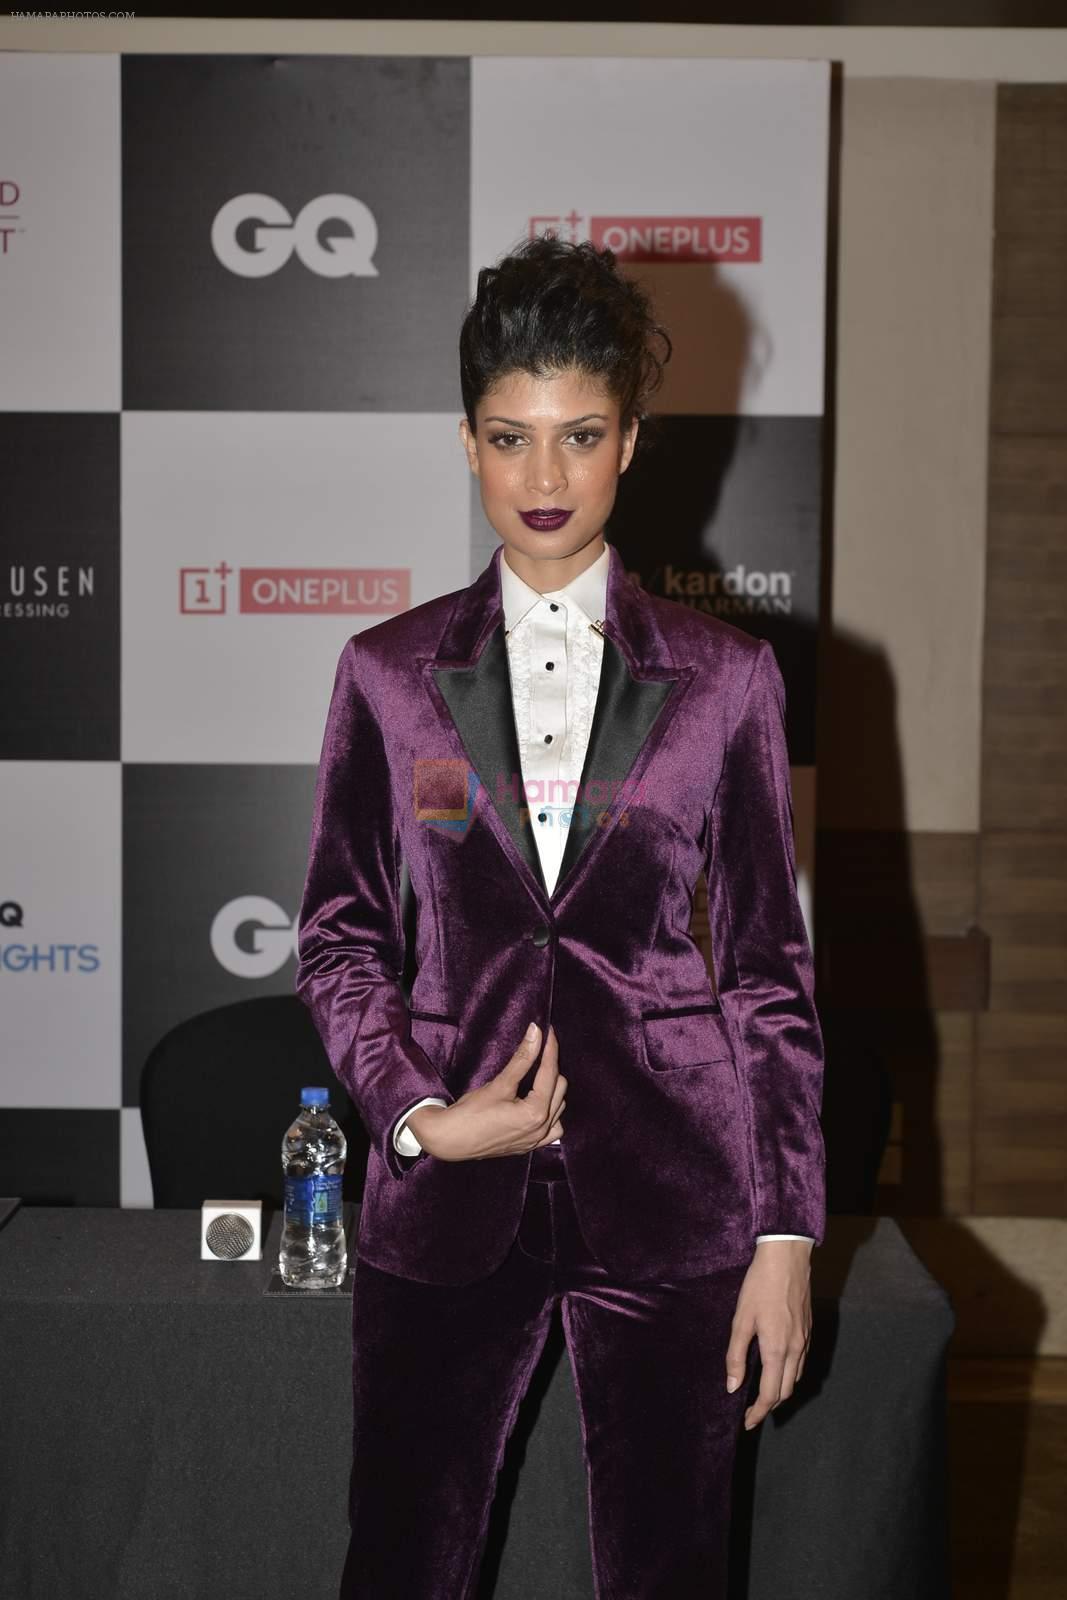 Tina Desae at GQ Fashion Nights Red Carpet on 1st Dec 2015